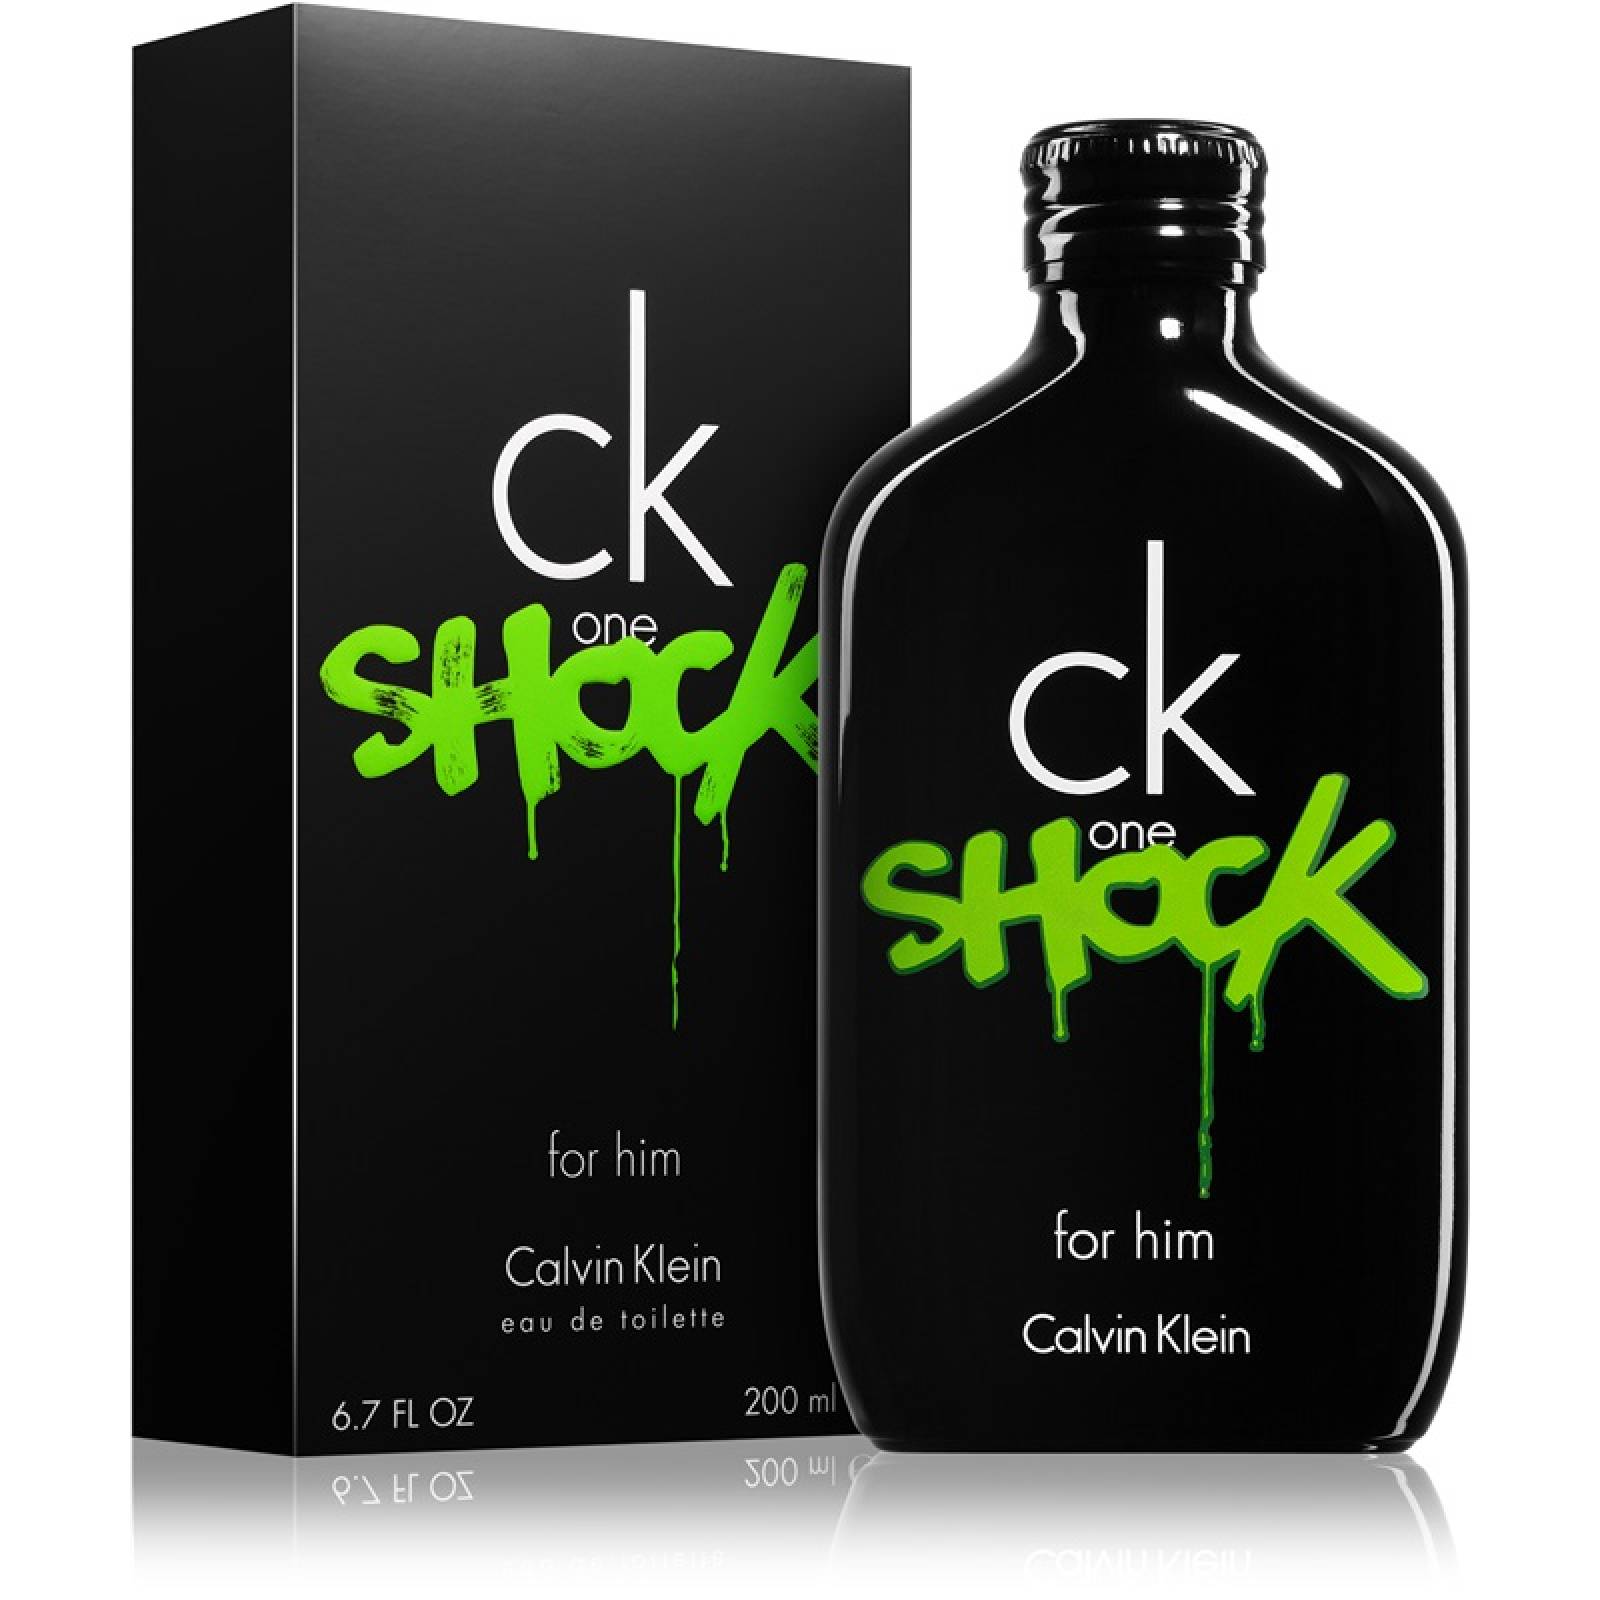 Perfume Ck One Shock Hombre Calvin Klein Edt 200ml Original